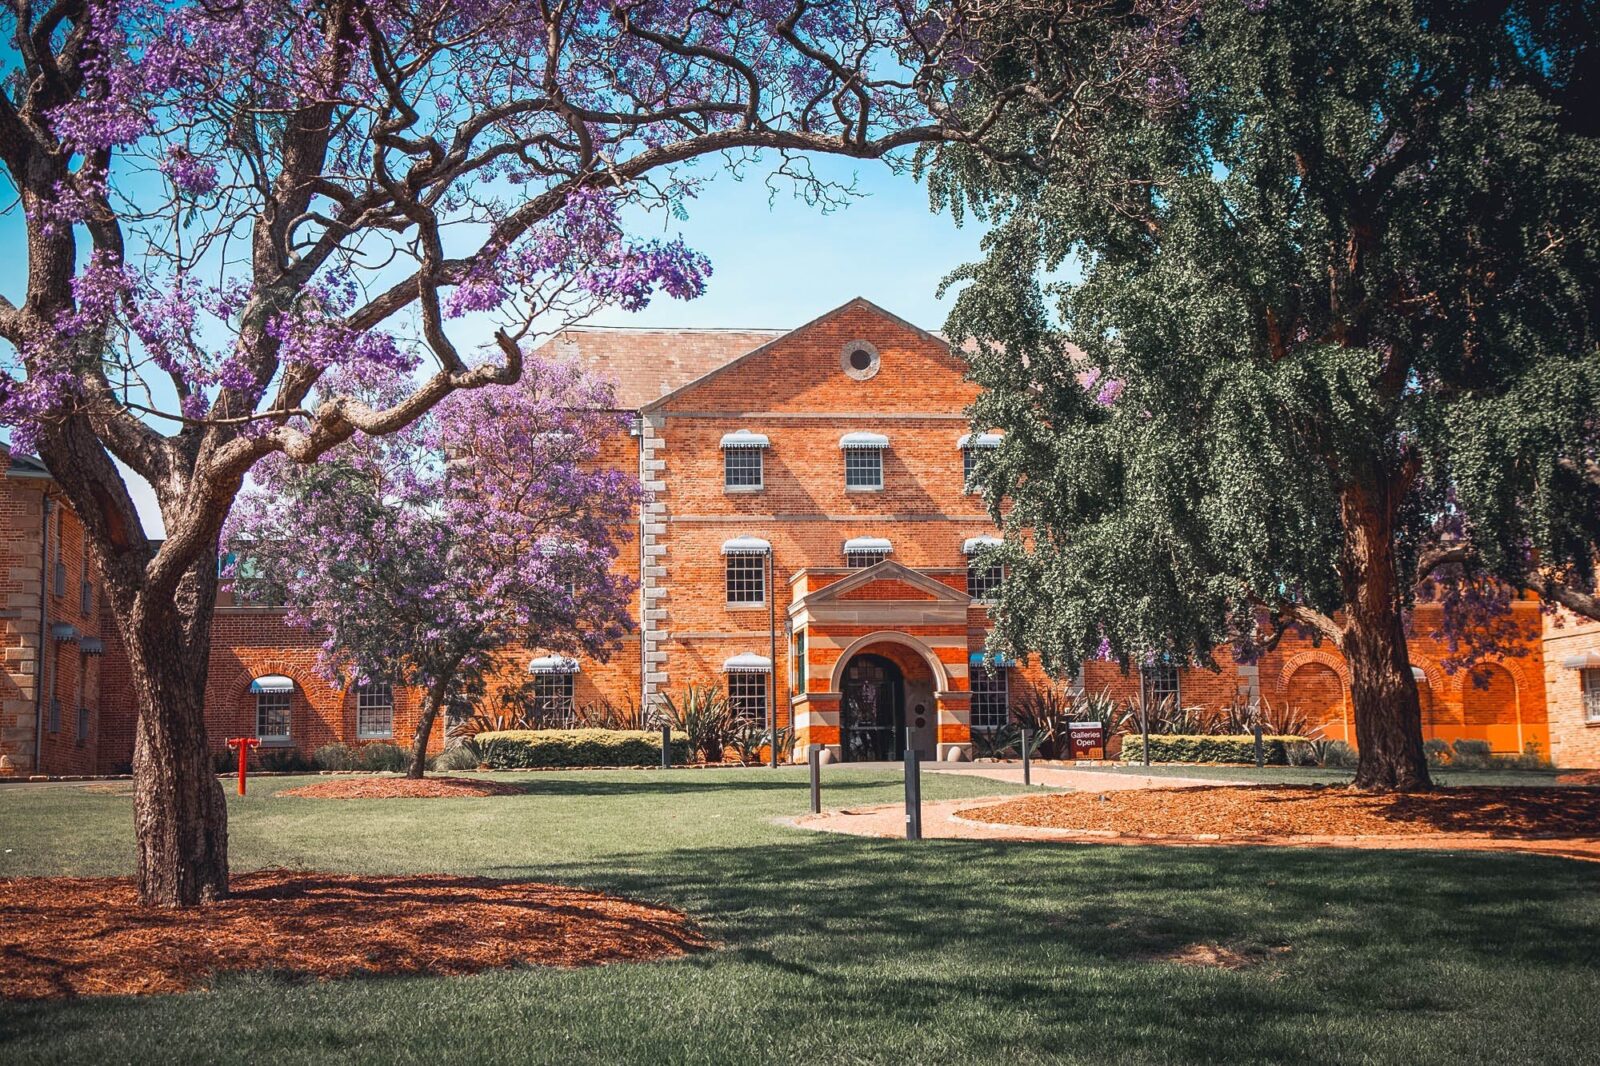 Image of building front including jacaranda tree in bloom